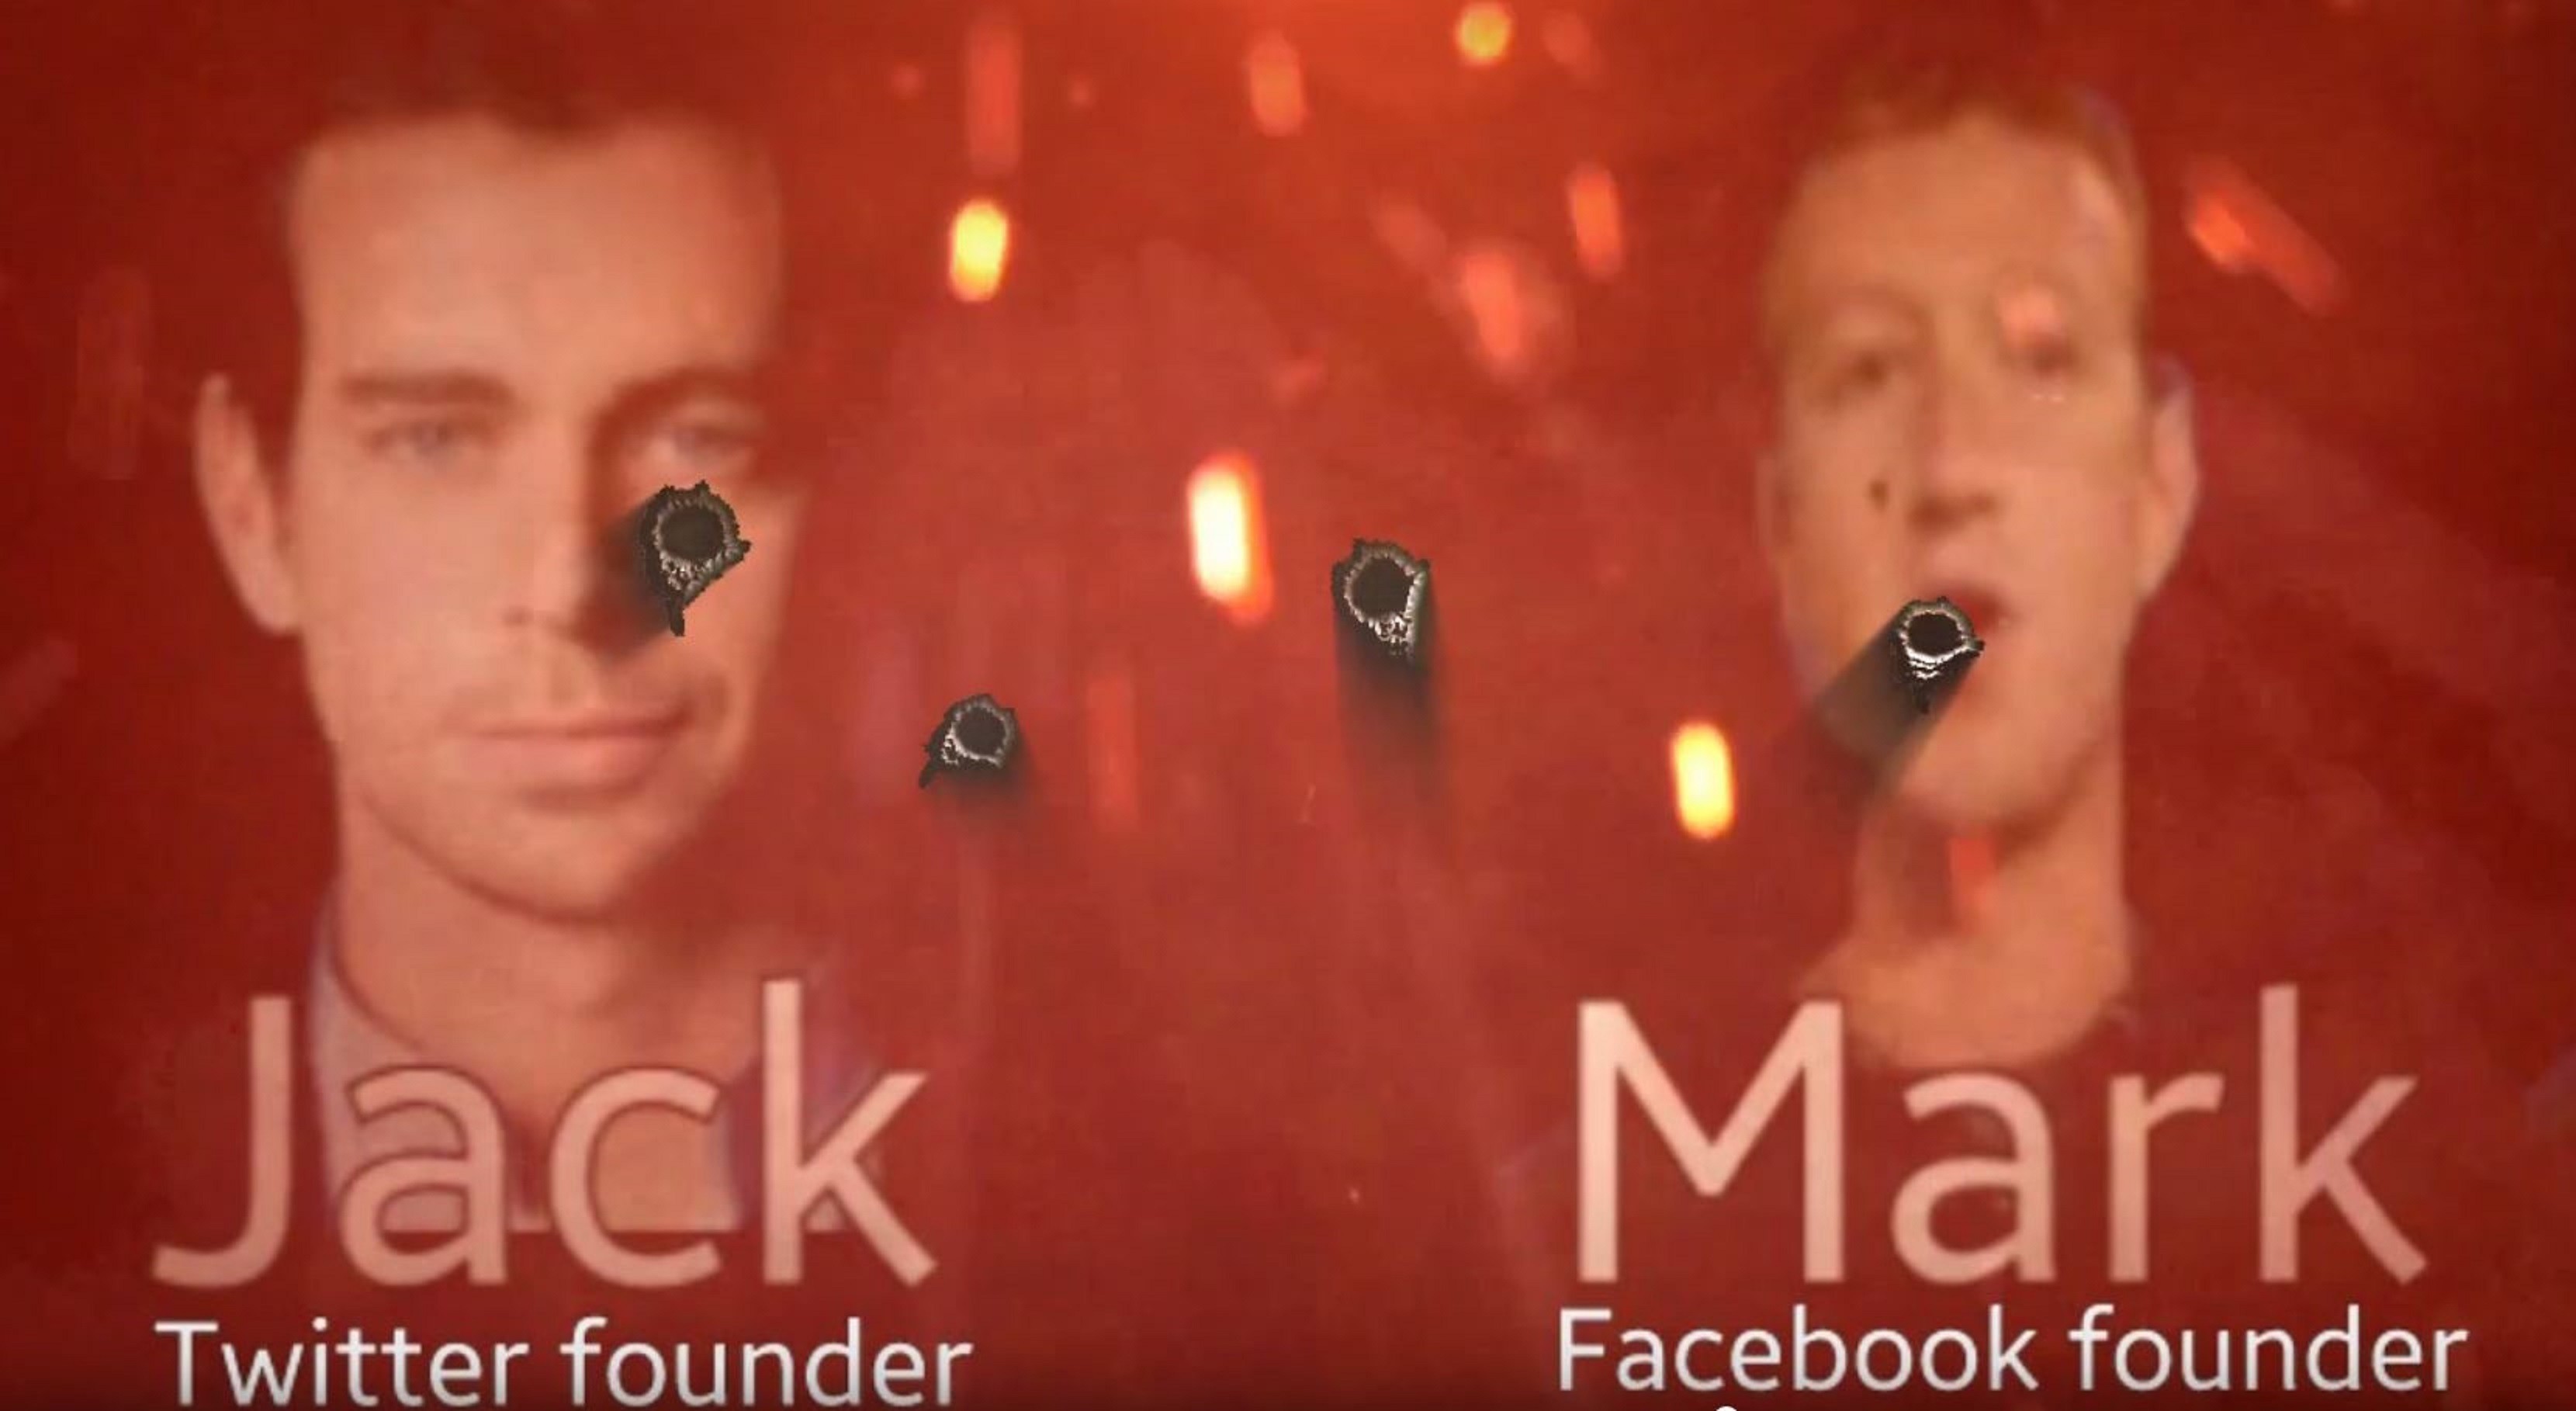 ISIS threat on Mark Zuckerberg and Twitter's Jack Dorsey